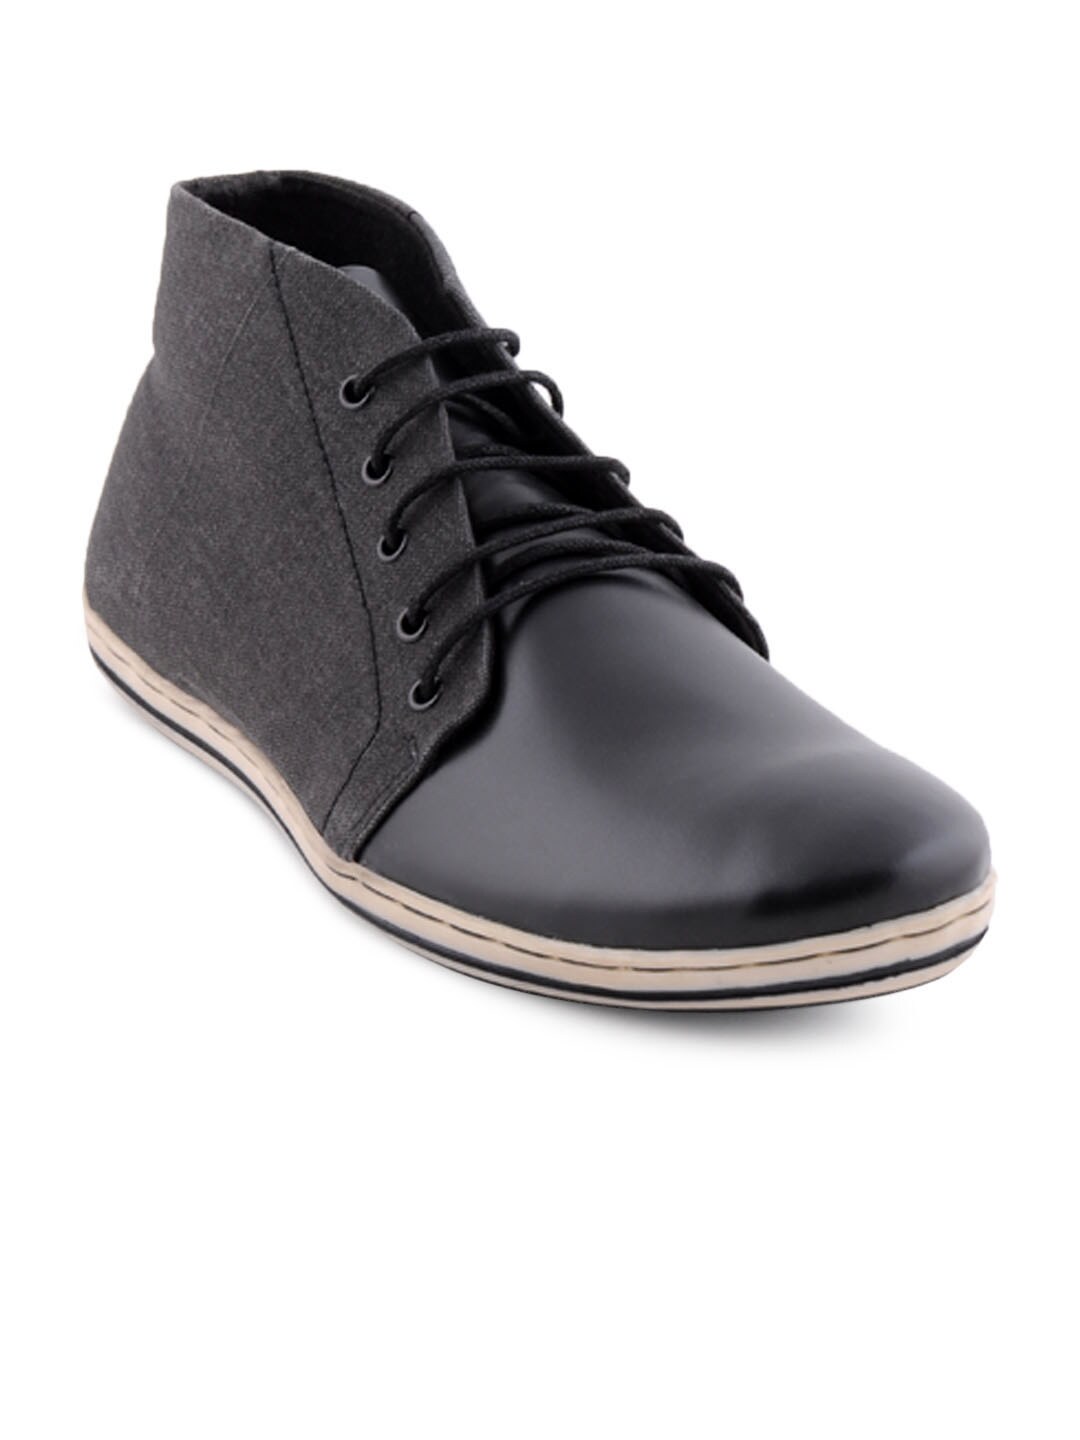 Carlton London Men Casual Black Casual Shoes